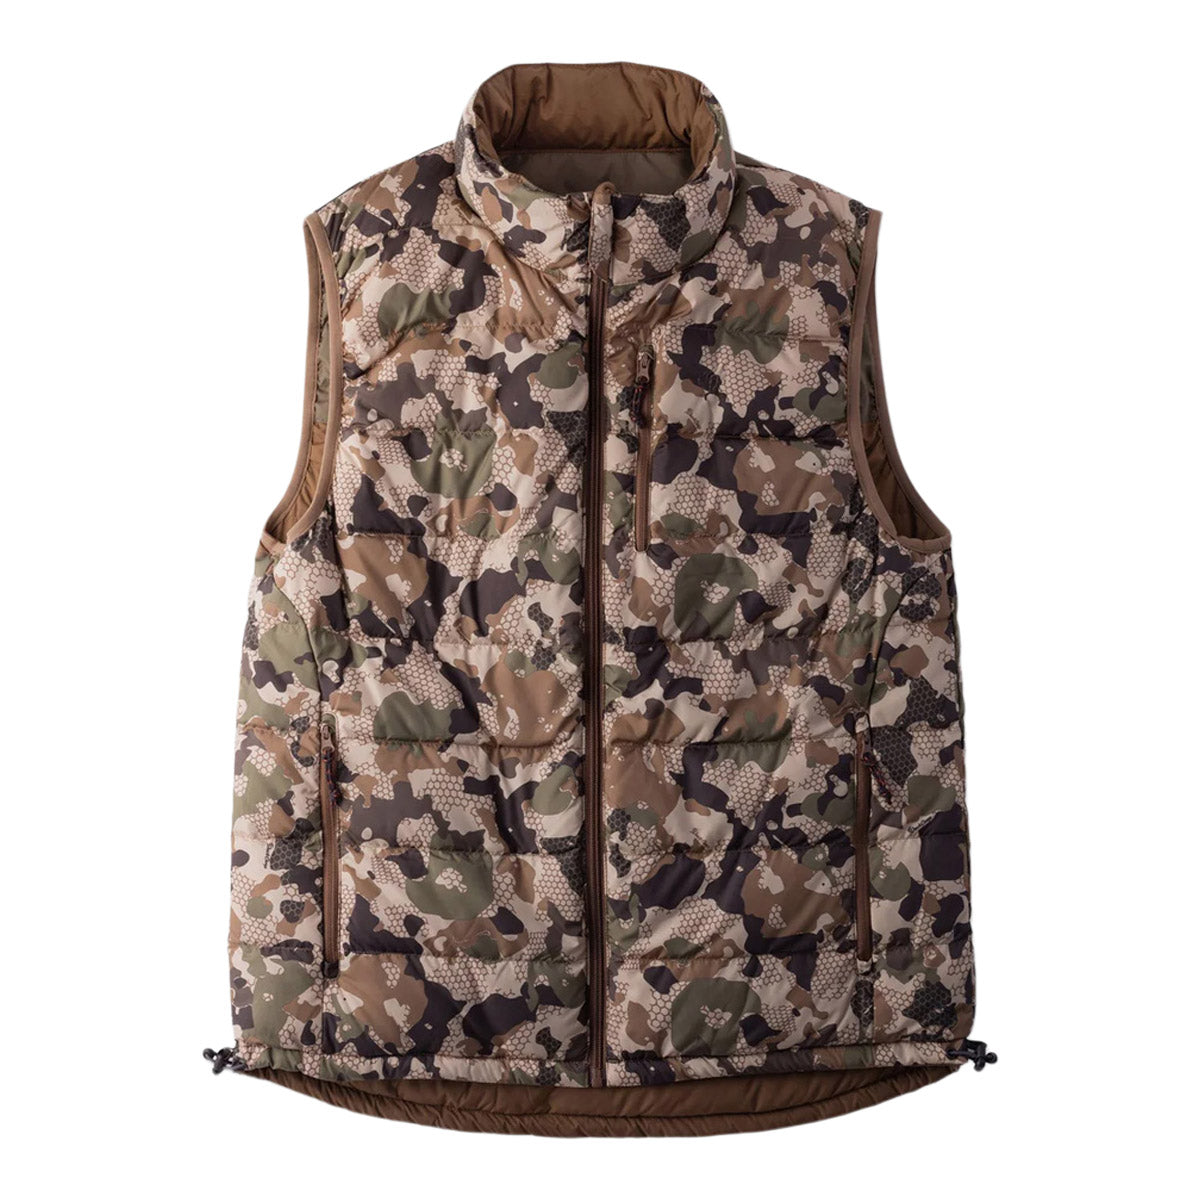 Duck Camp DryDown Vest